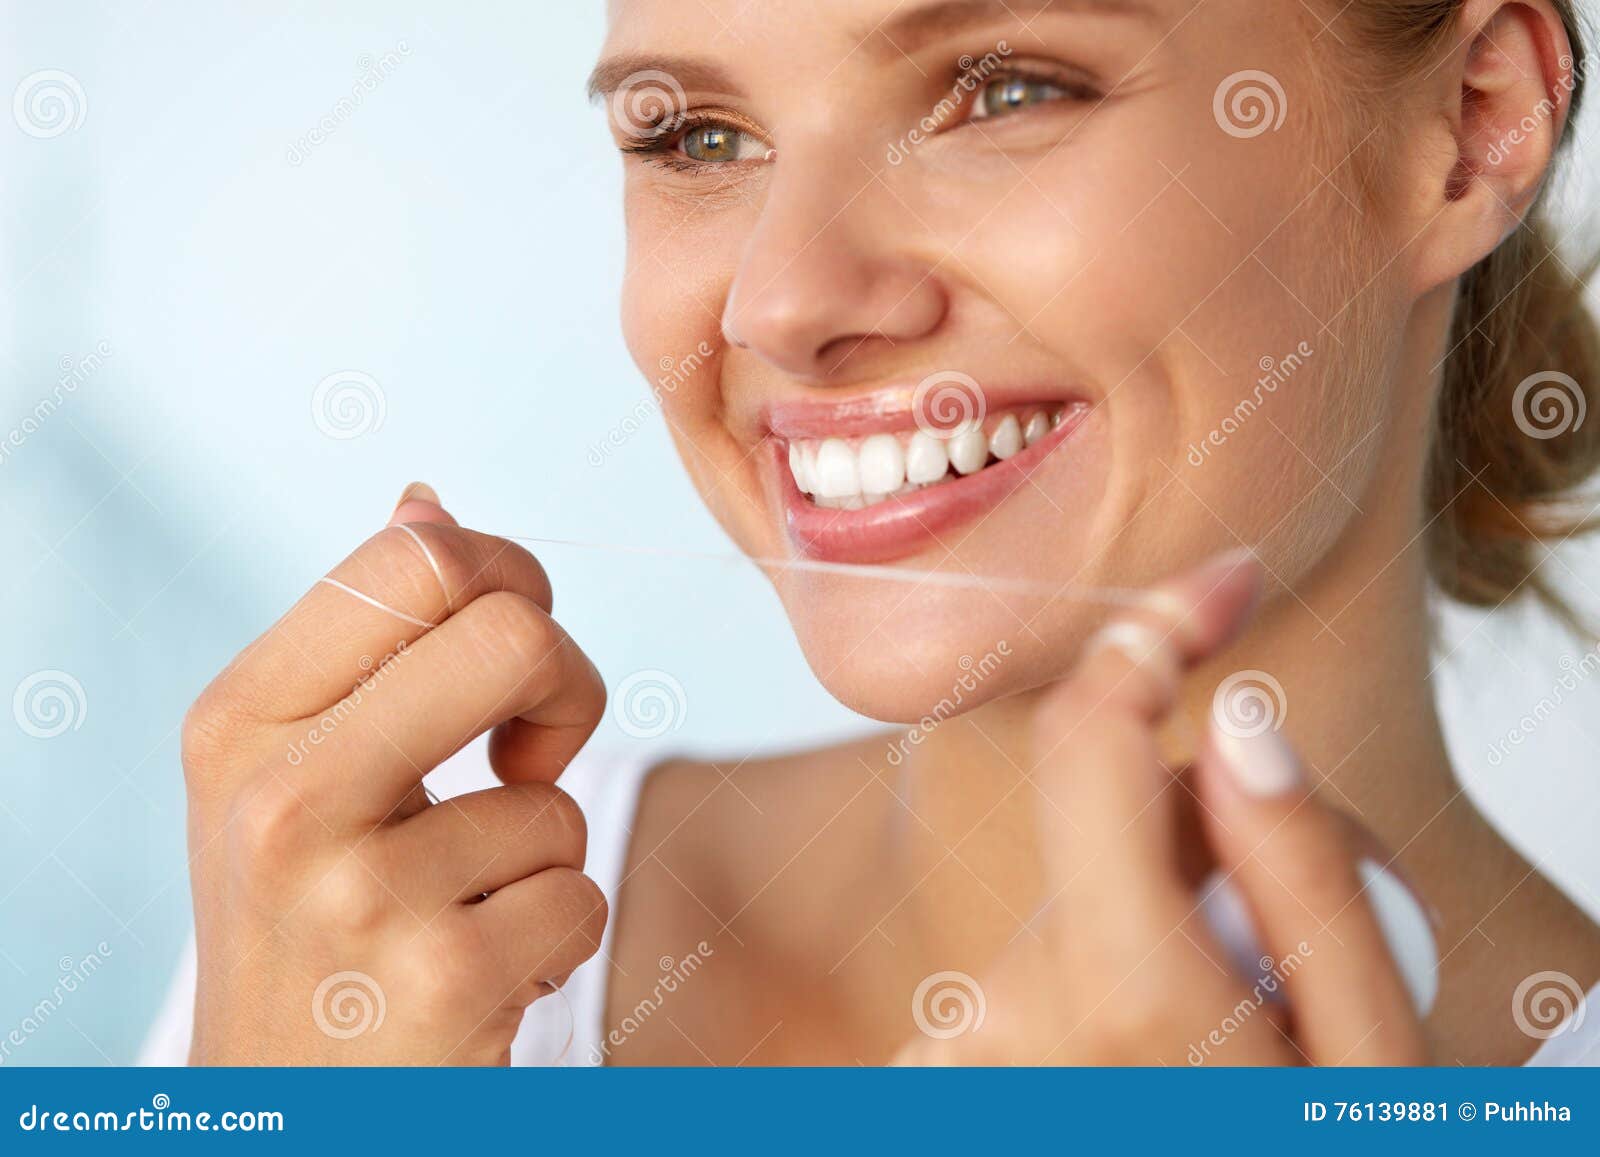 dental hygiene. beautiful woman flossing healthy white teeth